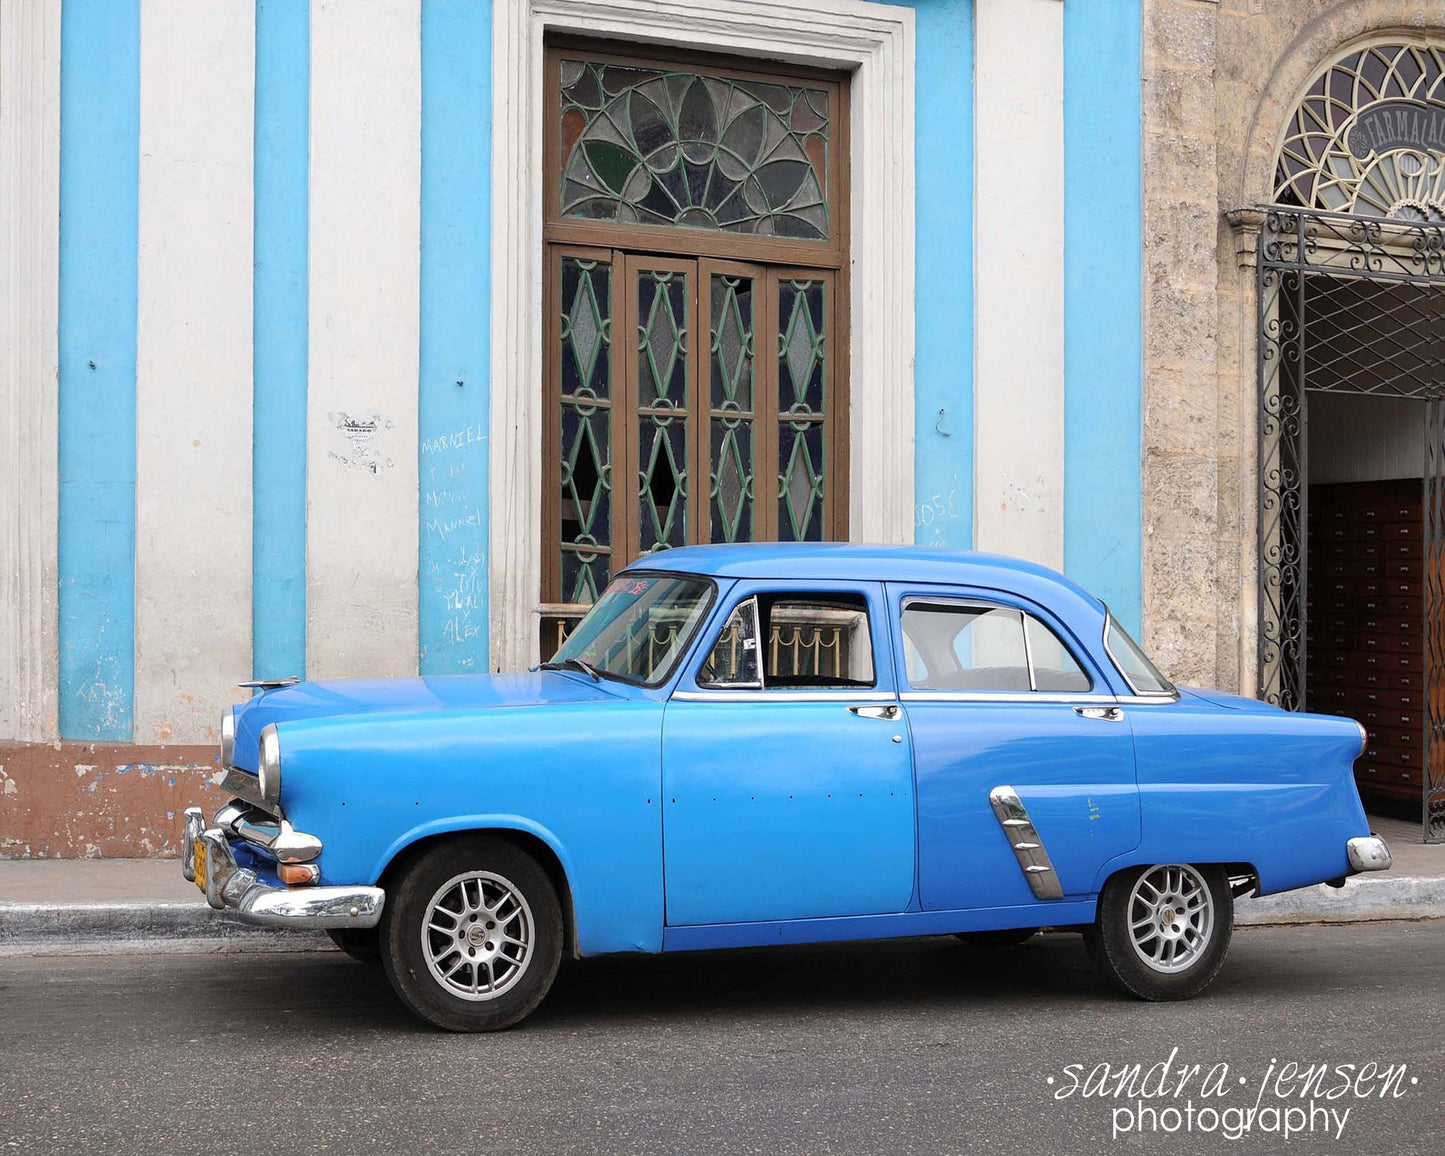 Print - Cuba "Vintage Car"